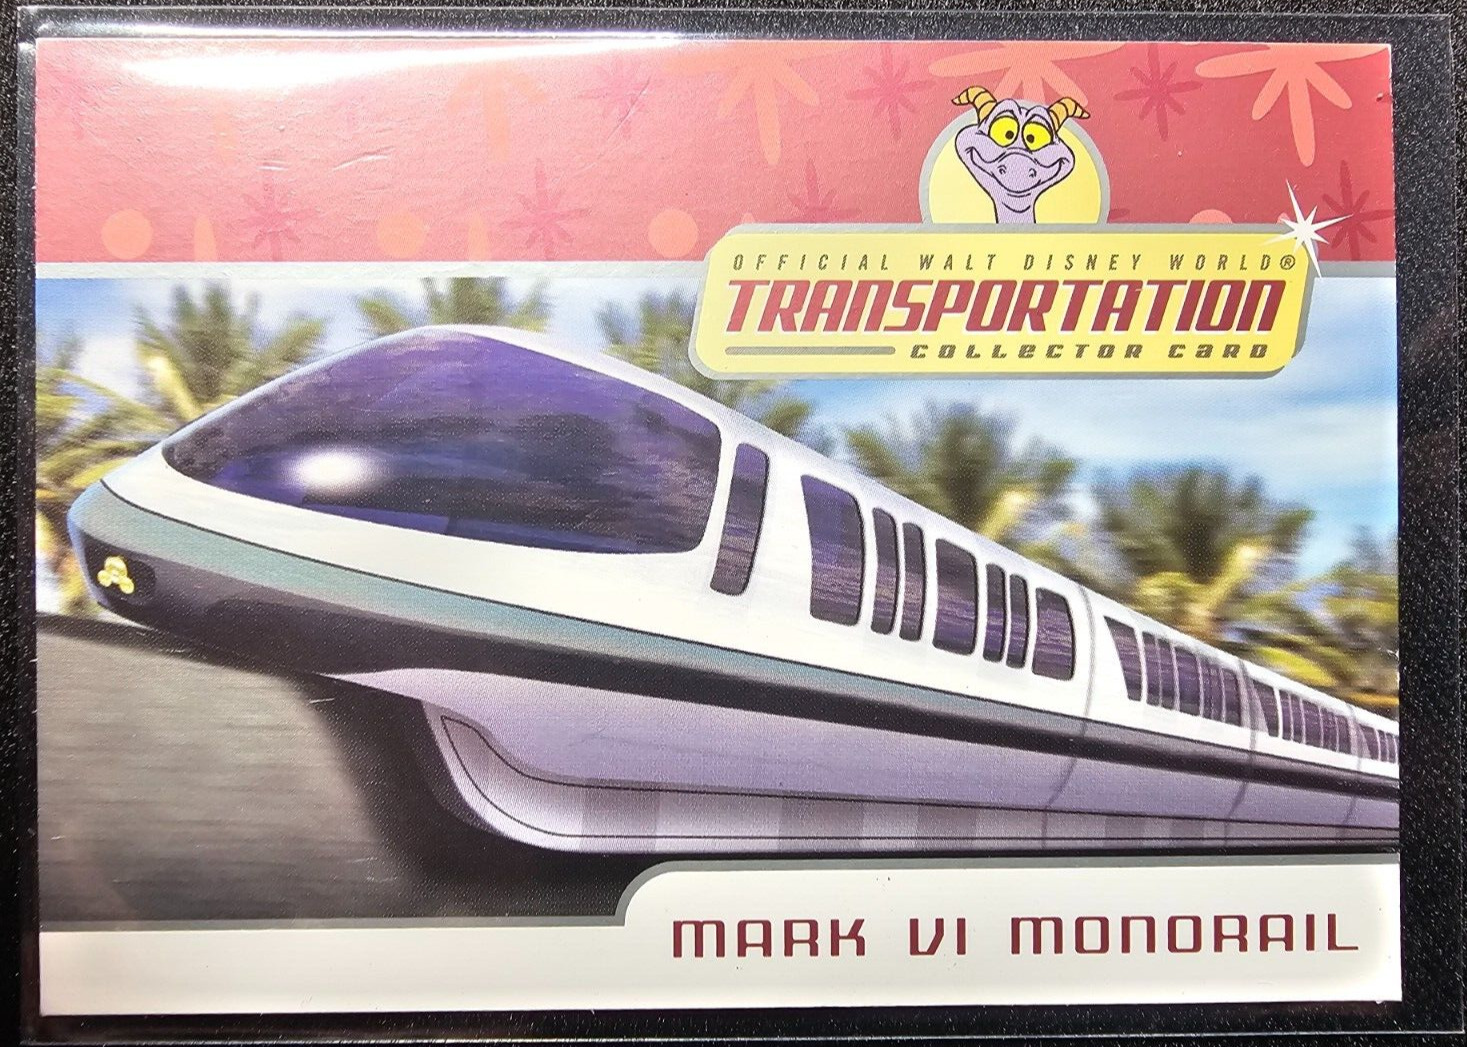 Official Walt Disney World Transportation Mark VI Monorail #8 of 18 Series1 Card